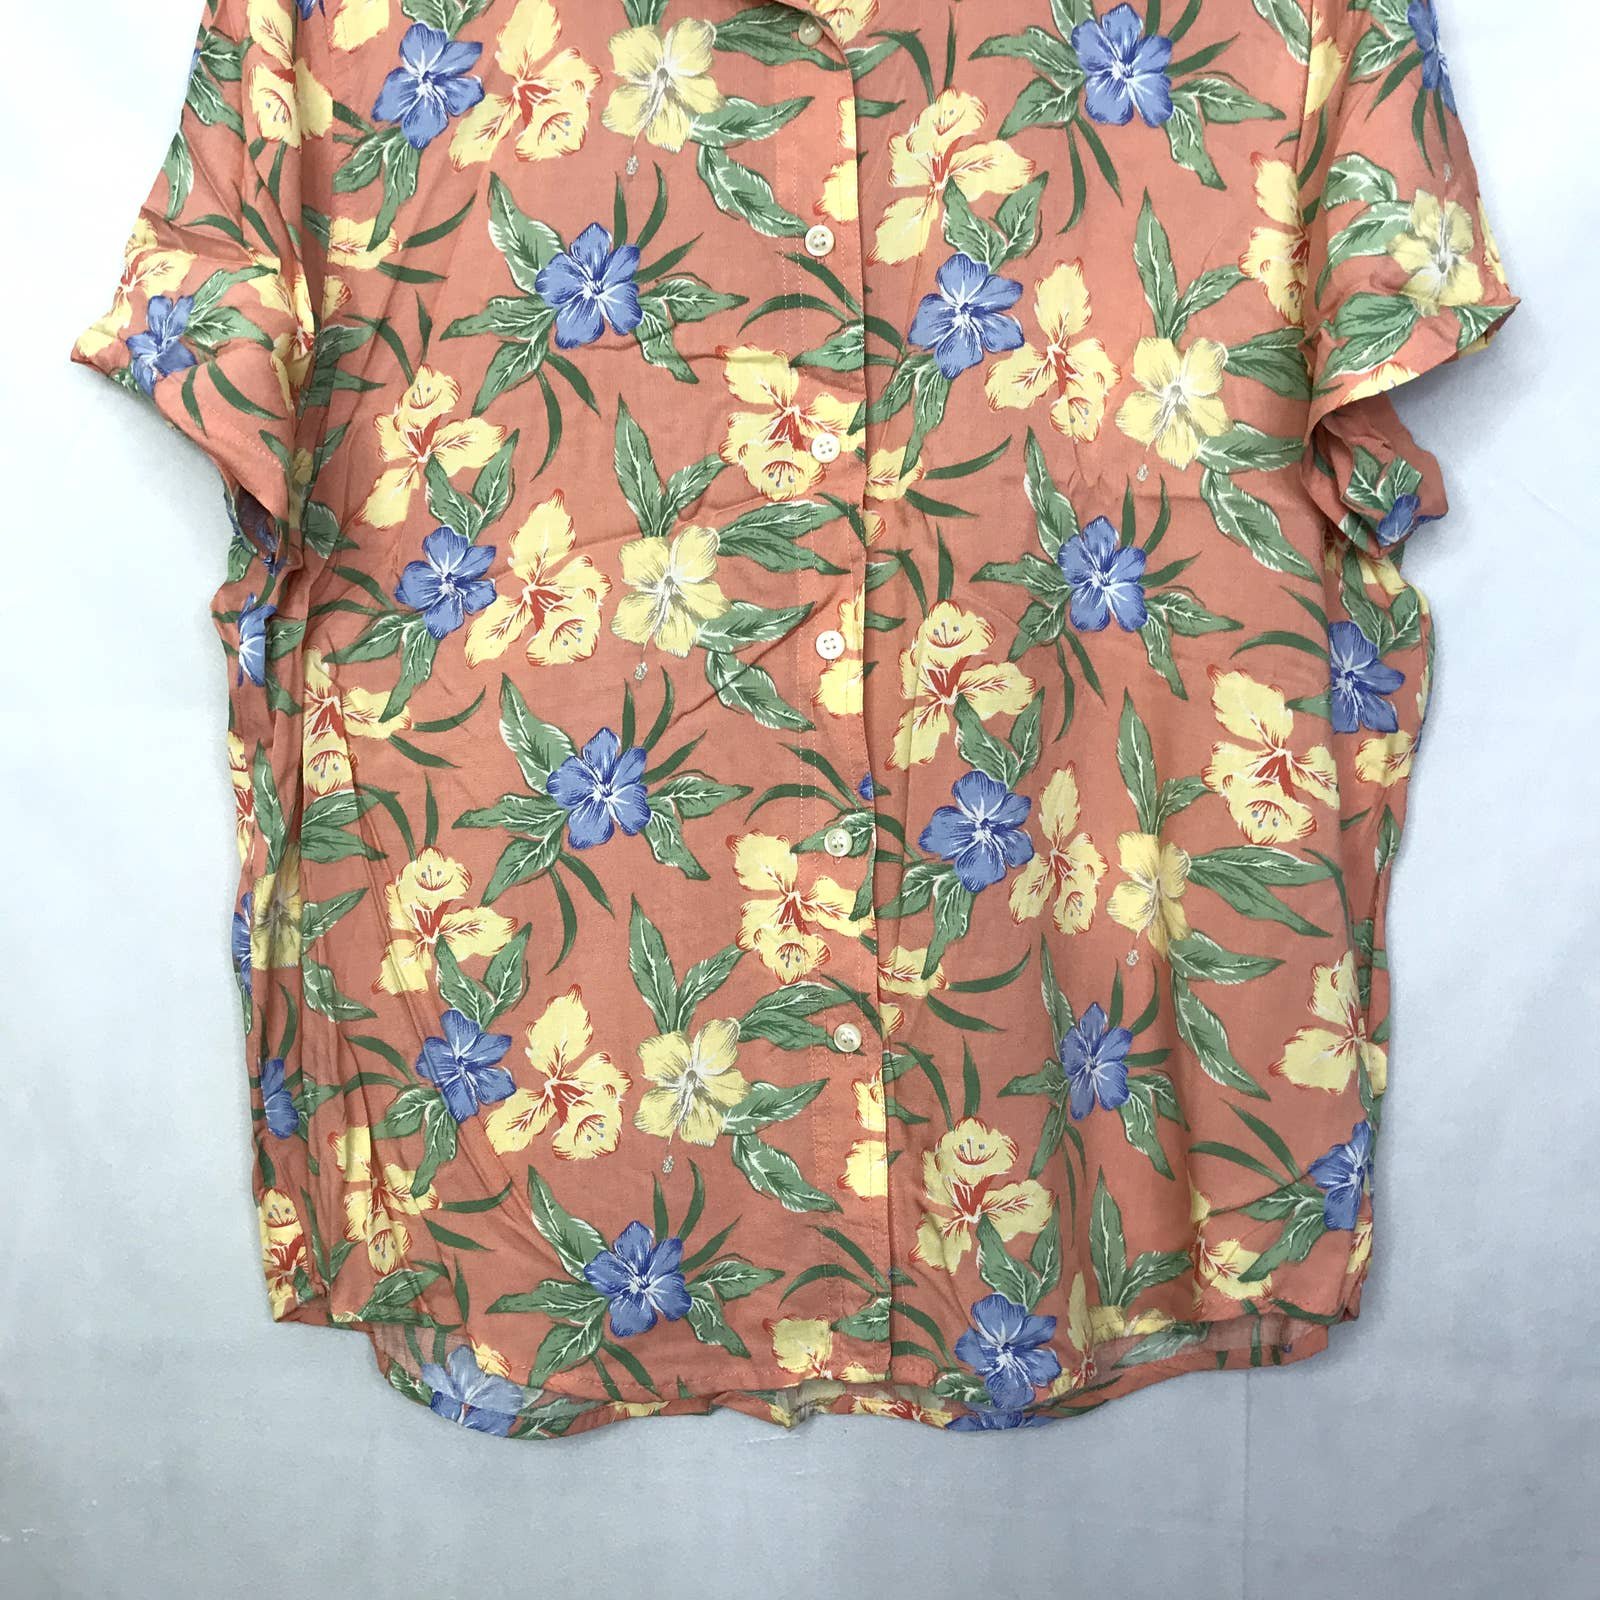 Stylish Vintage Somona tropical floral print short sleeve Hawaiian button down shirt oZihb00y0 New Style